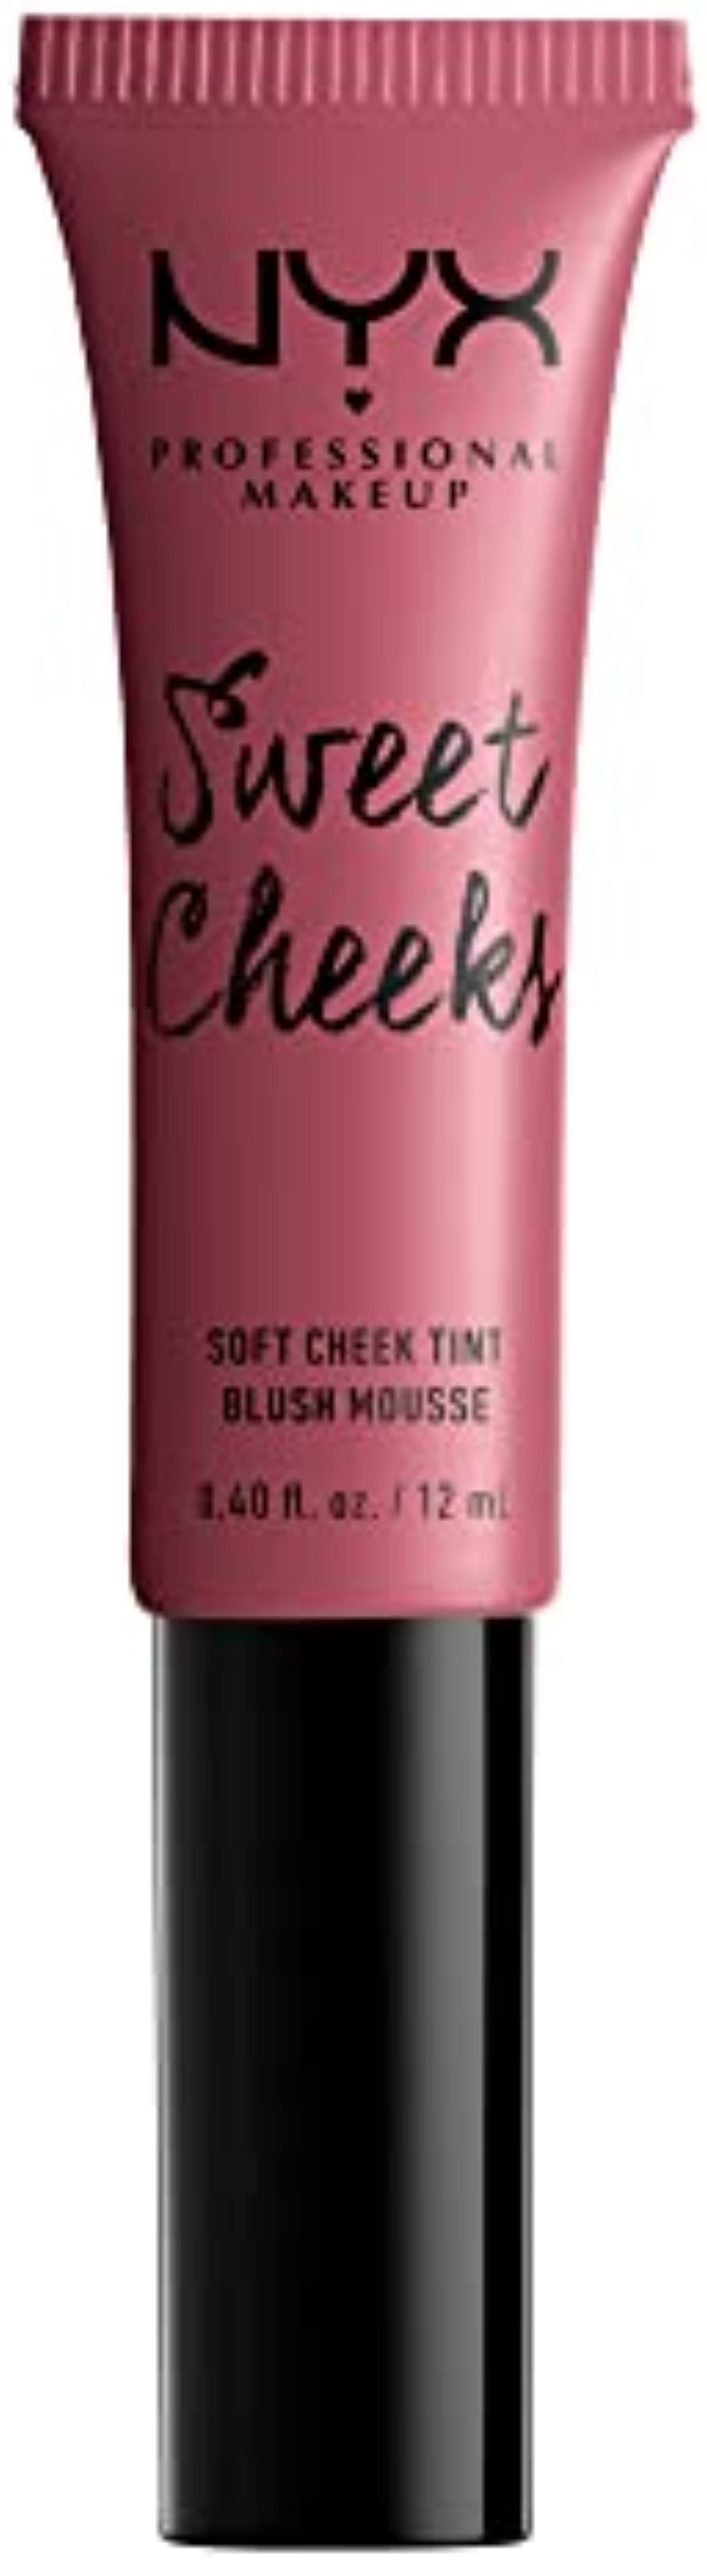 NYX PROFESSIONAL MAKEUP Sweet Cheeks Soft Cheek Tint, Cream Blush - Baby Doll